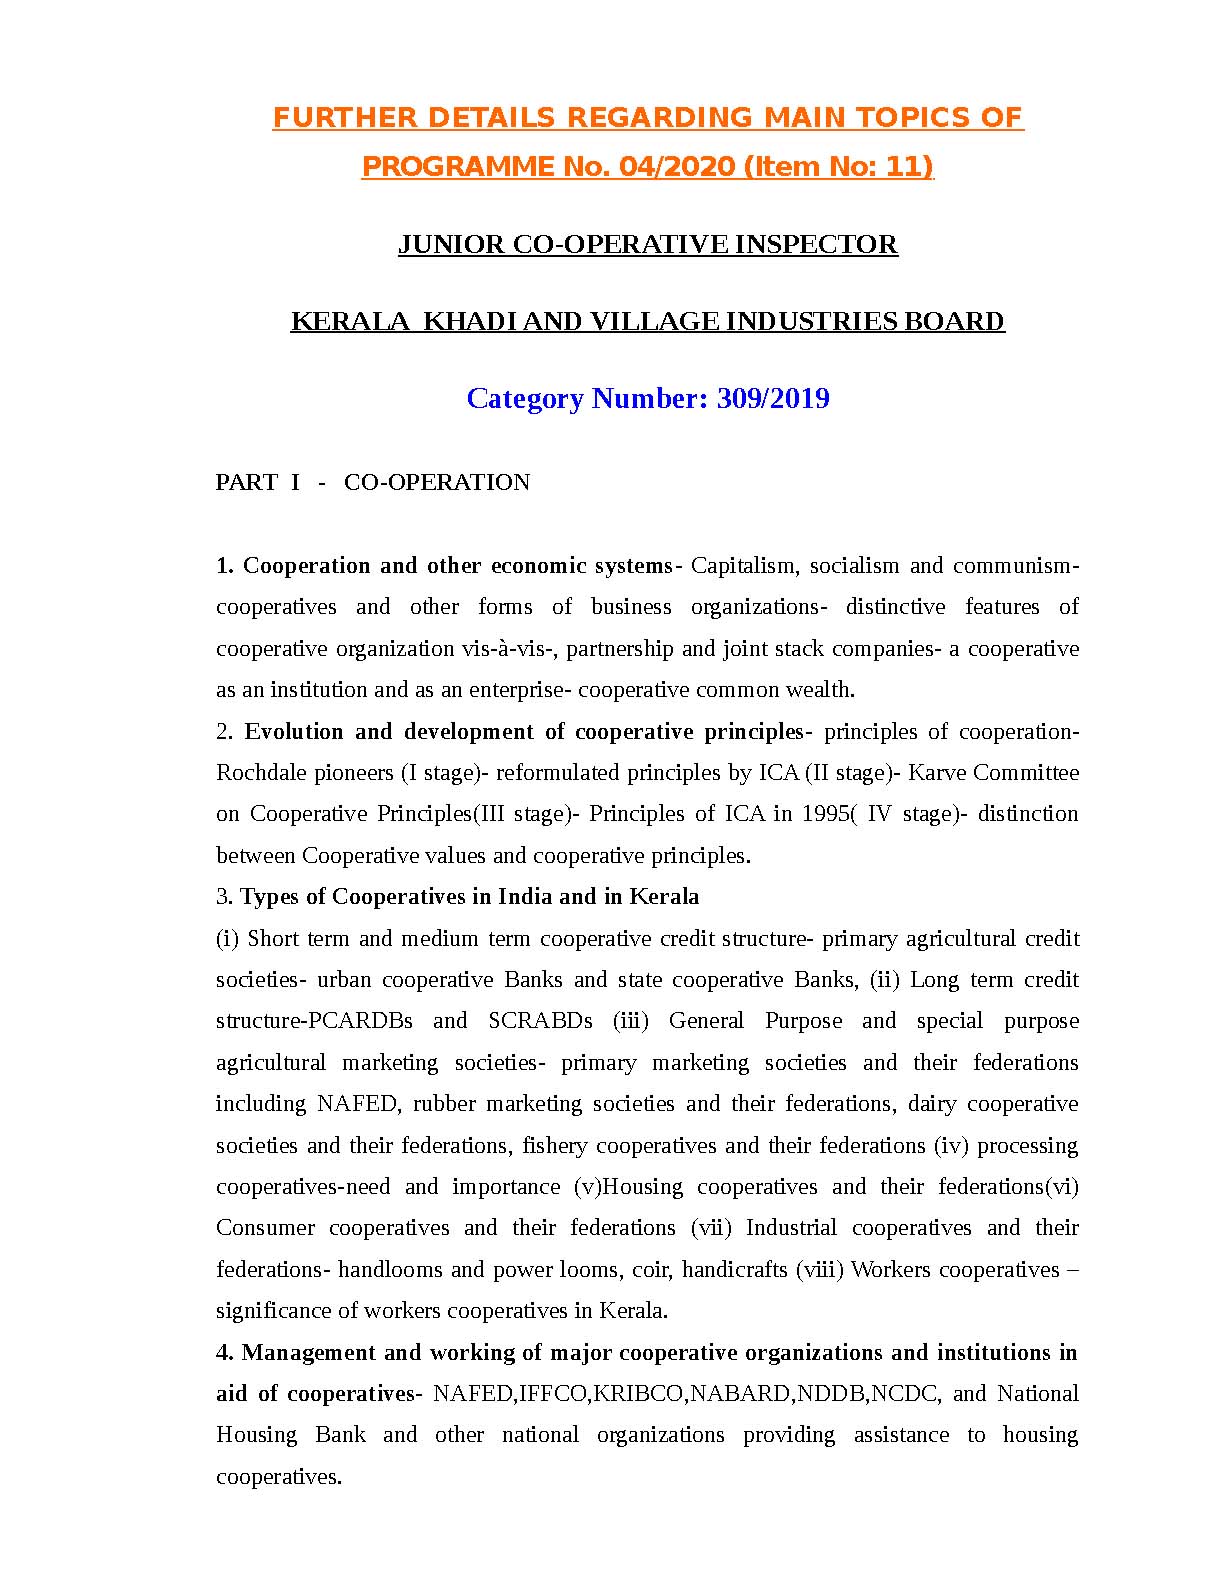 KPSC Junior Co Operative Inspector Exam Syllabus - Notification Image 1